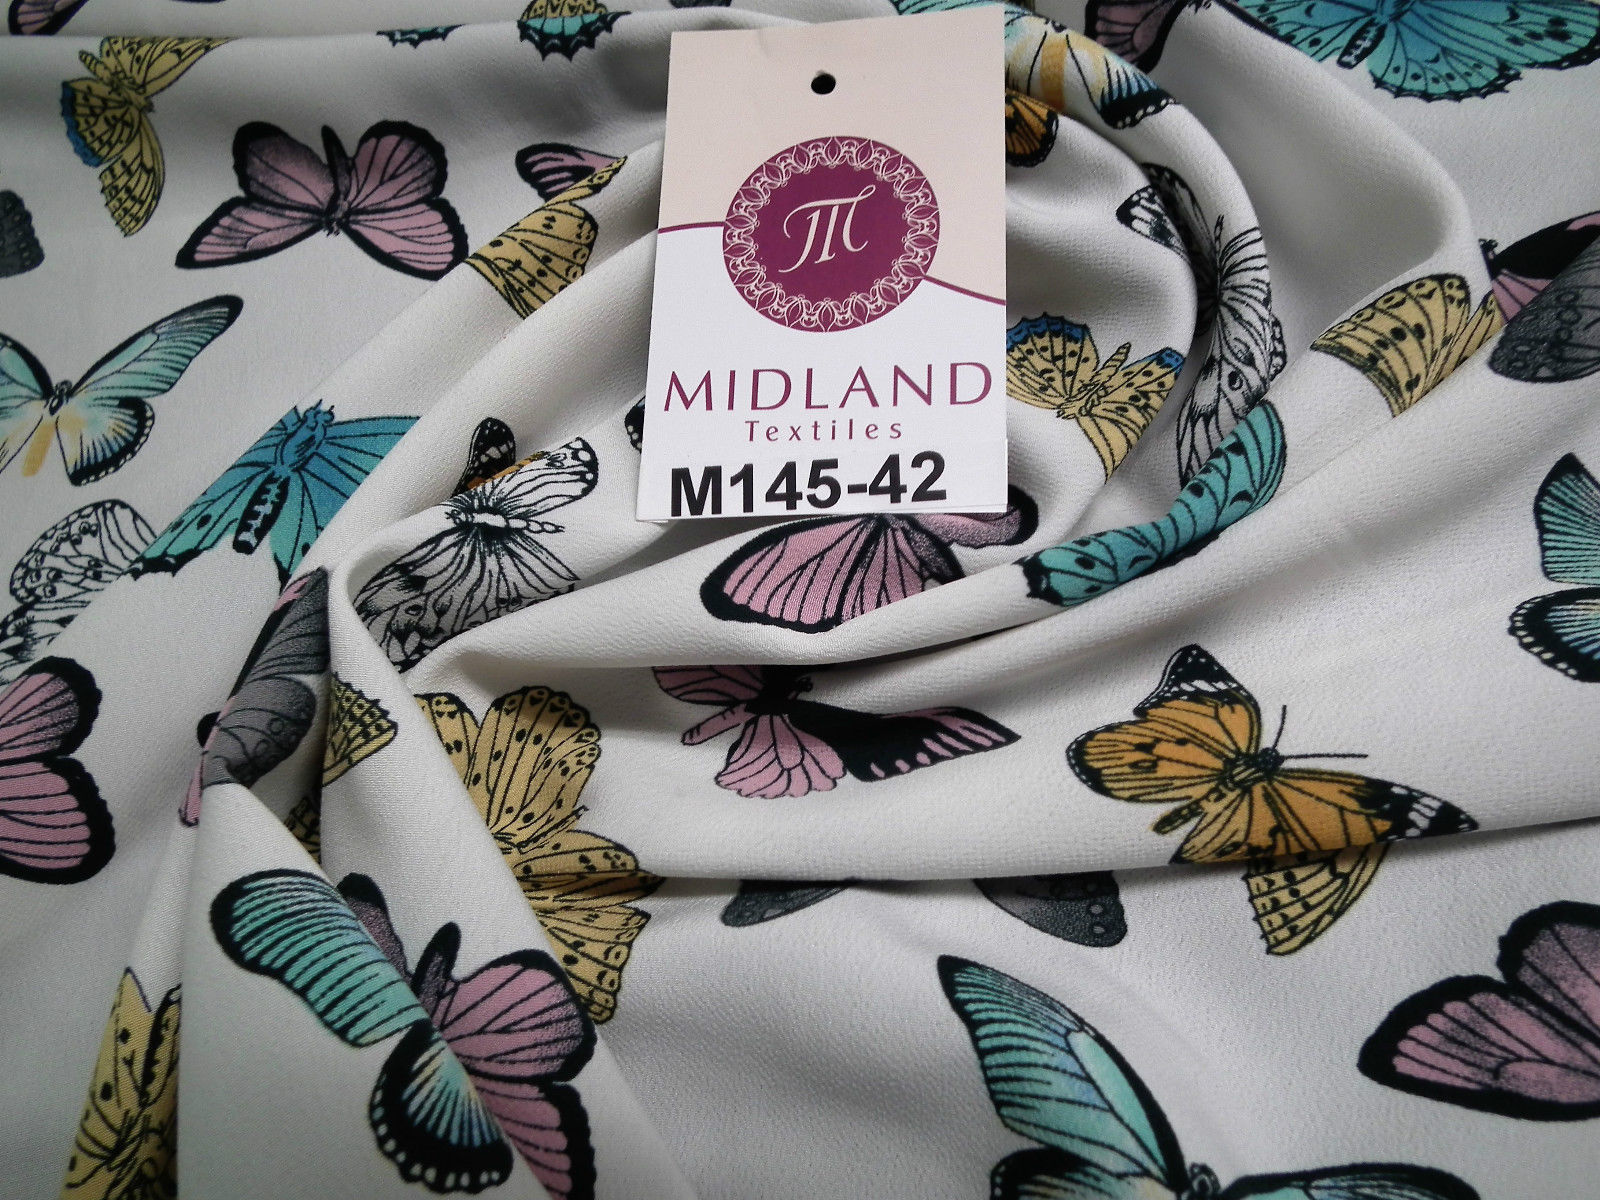 Pearl White Butterfly Printed peach koshibo dress fabric 58" wide M145-42 Mtex